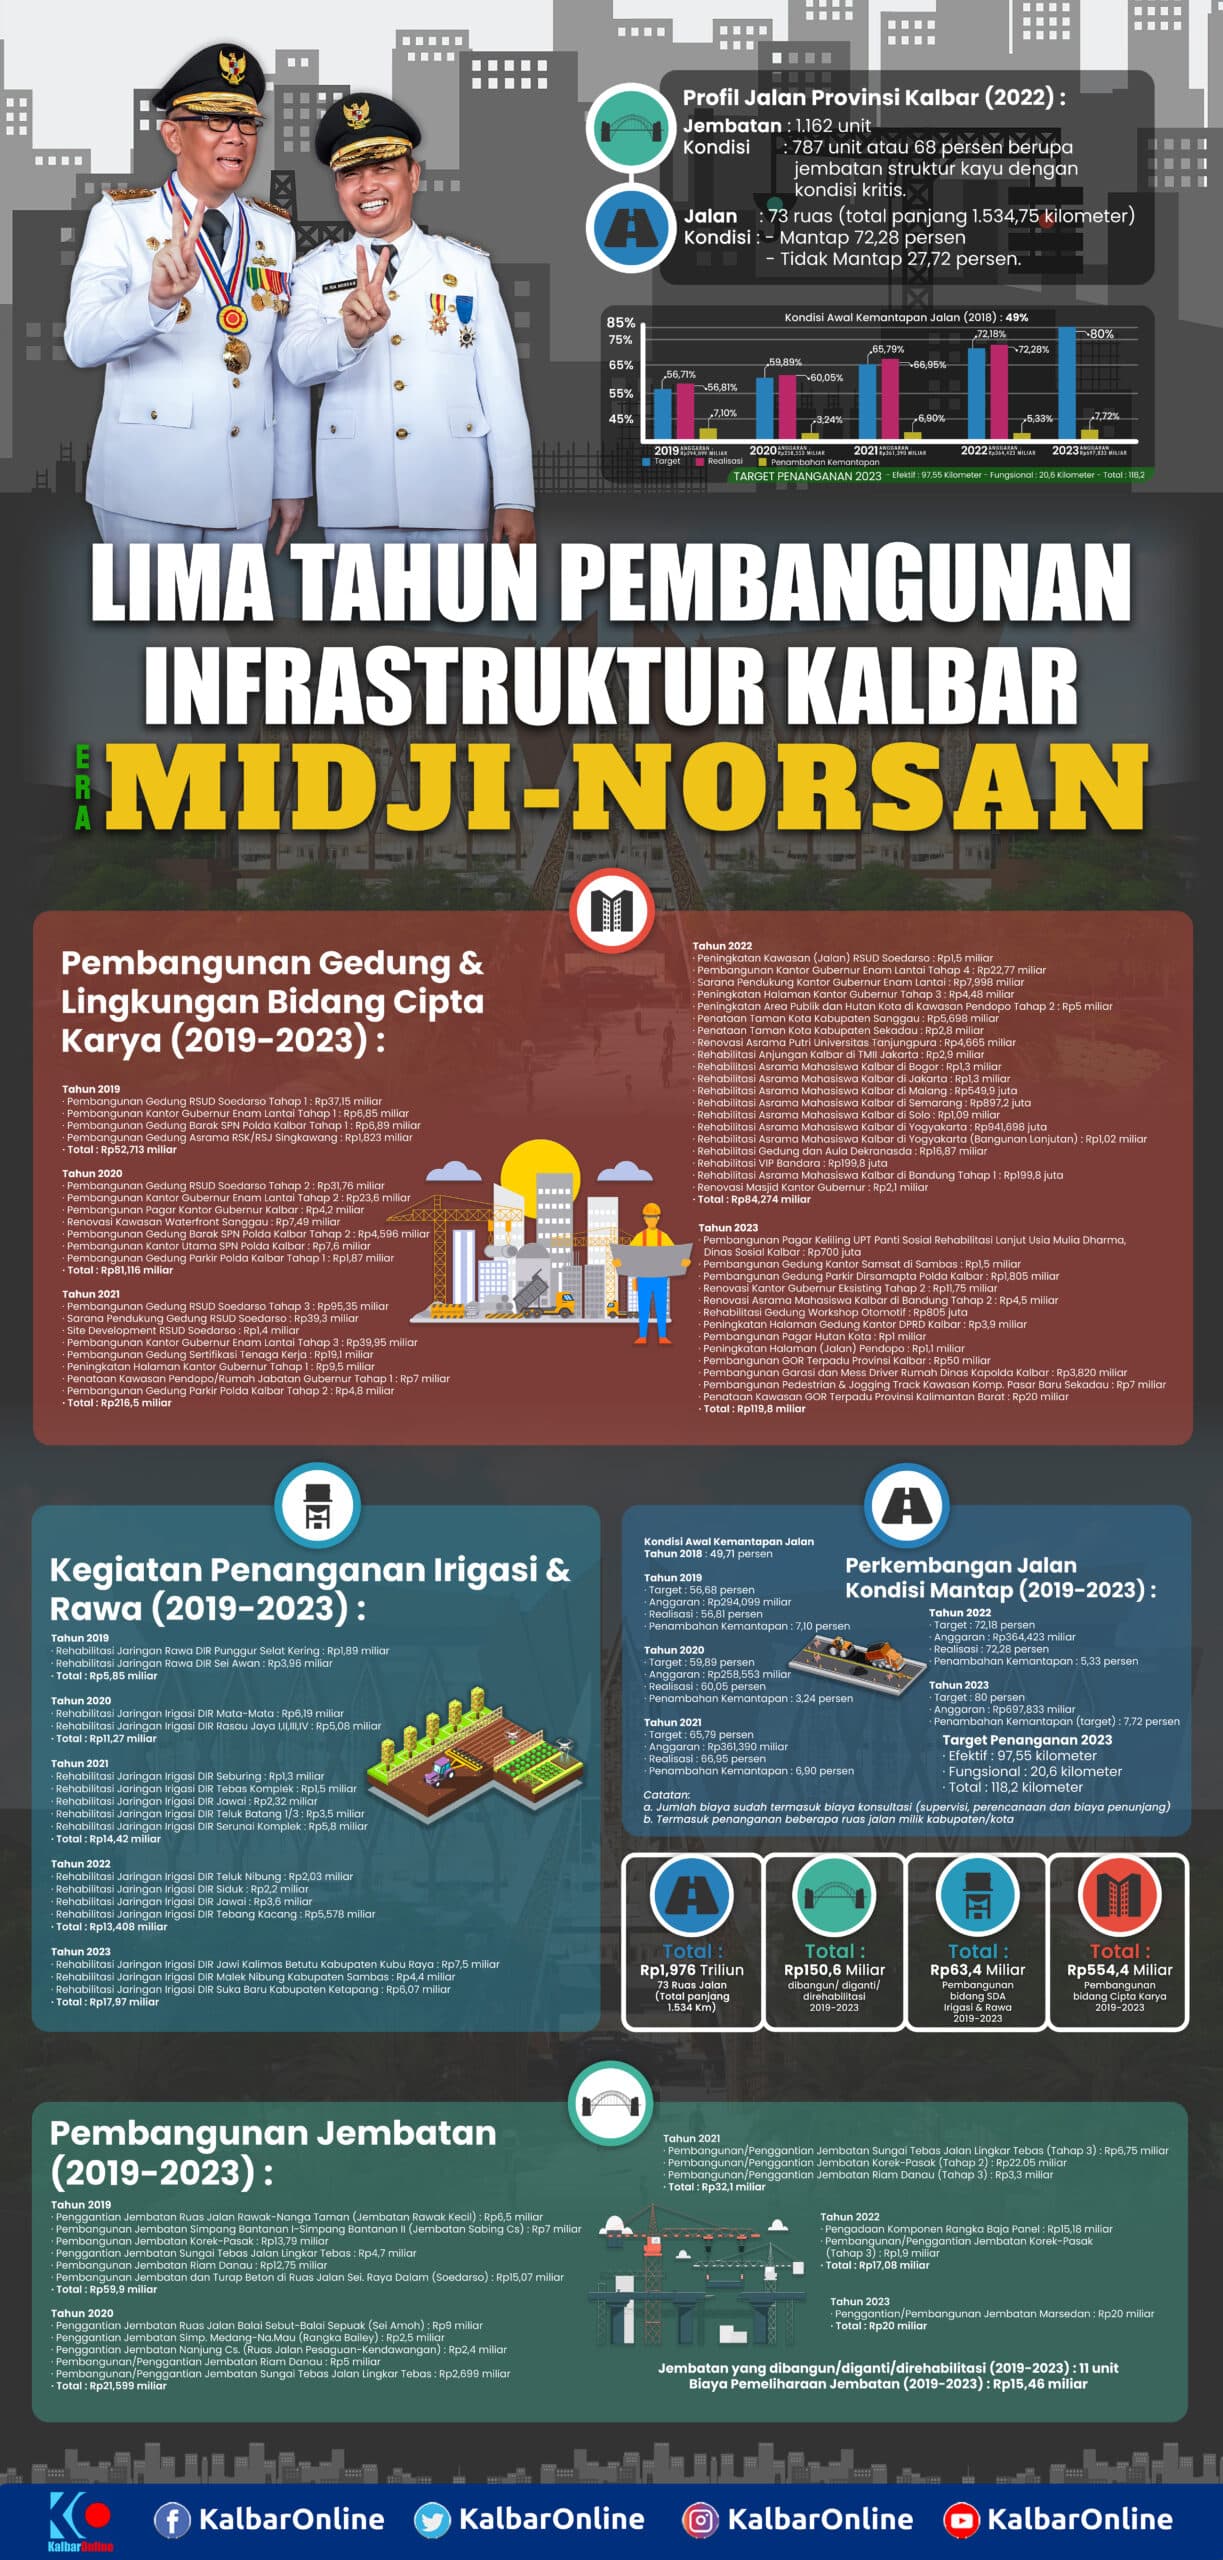 Infografis Lima Tahun Pembangunan Infrastruktur Kalbar di Era Sutarmidji - Ria Norsan